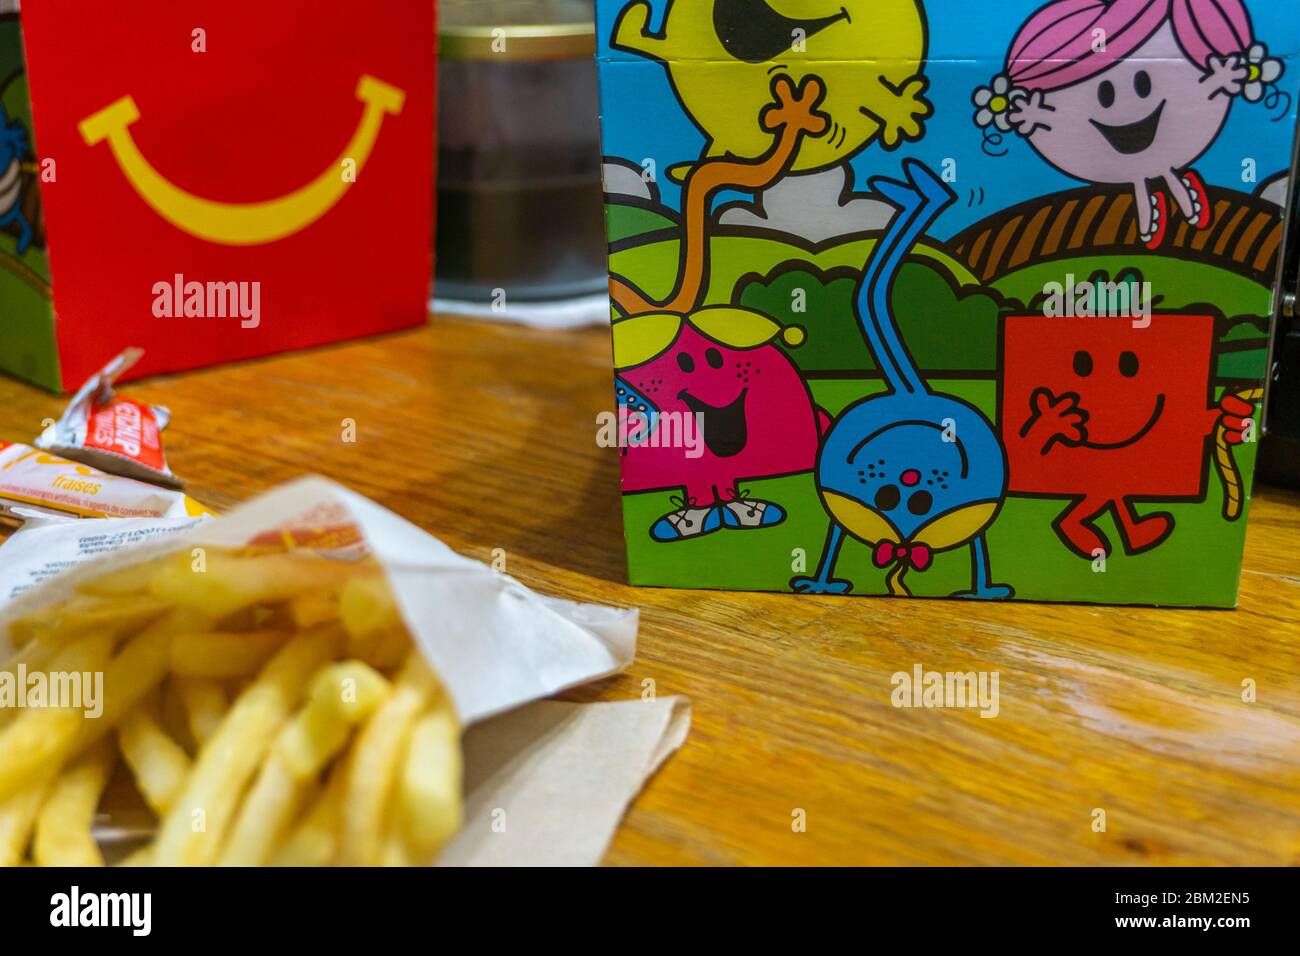 Feb 2020, Toronto, Canada - McDonald's Happy Meal box set. McDonald's is the world's largest fast food restaurant. Illustrative editorial. Stock Photo